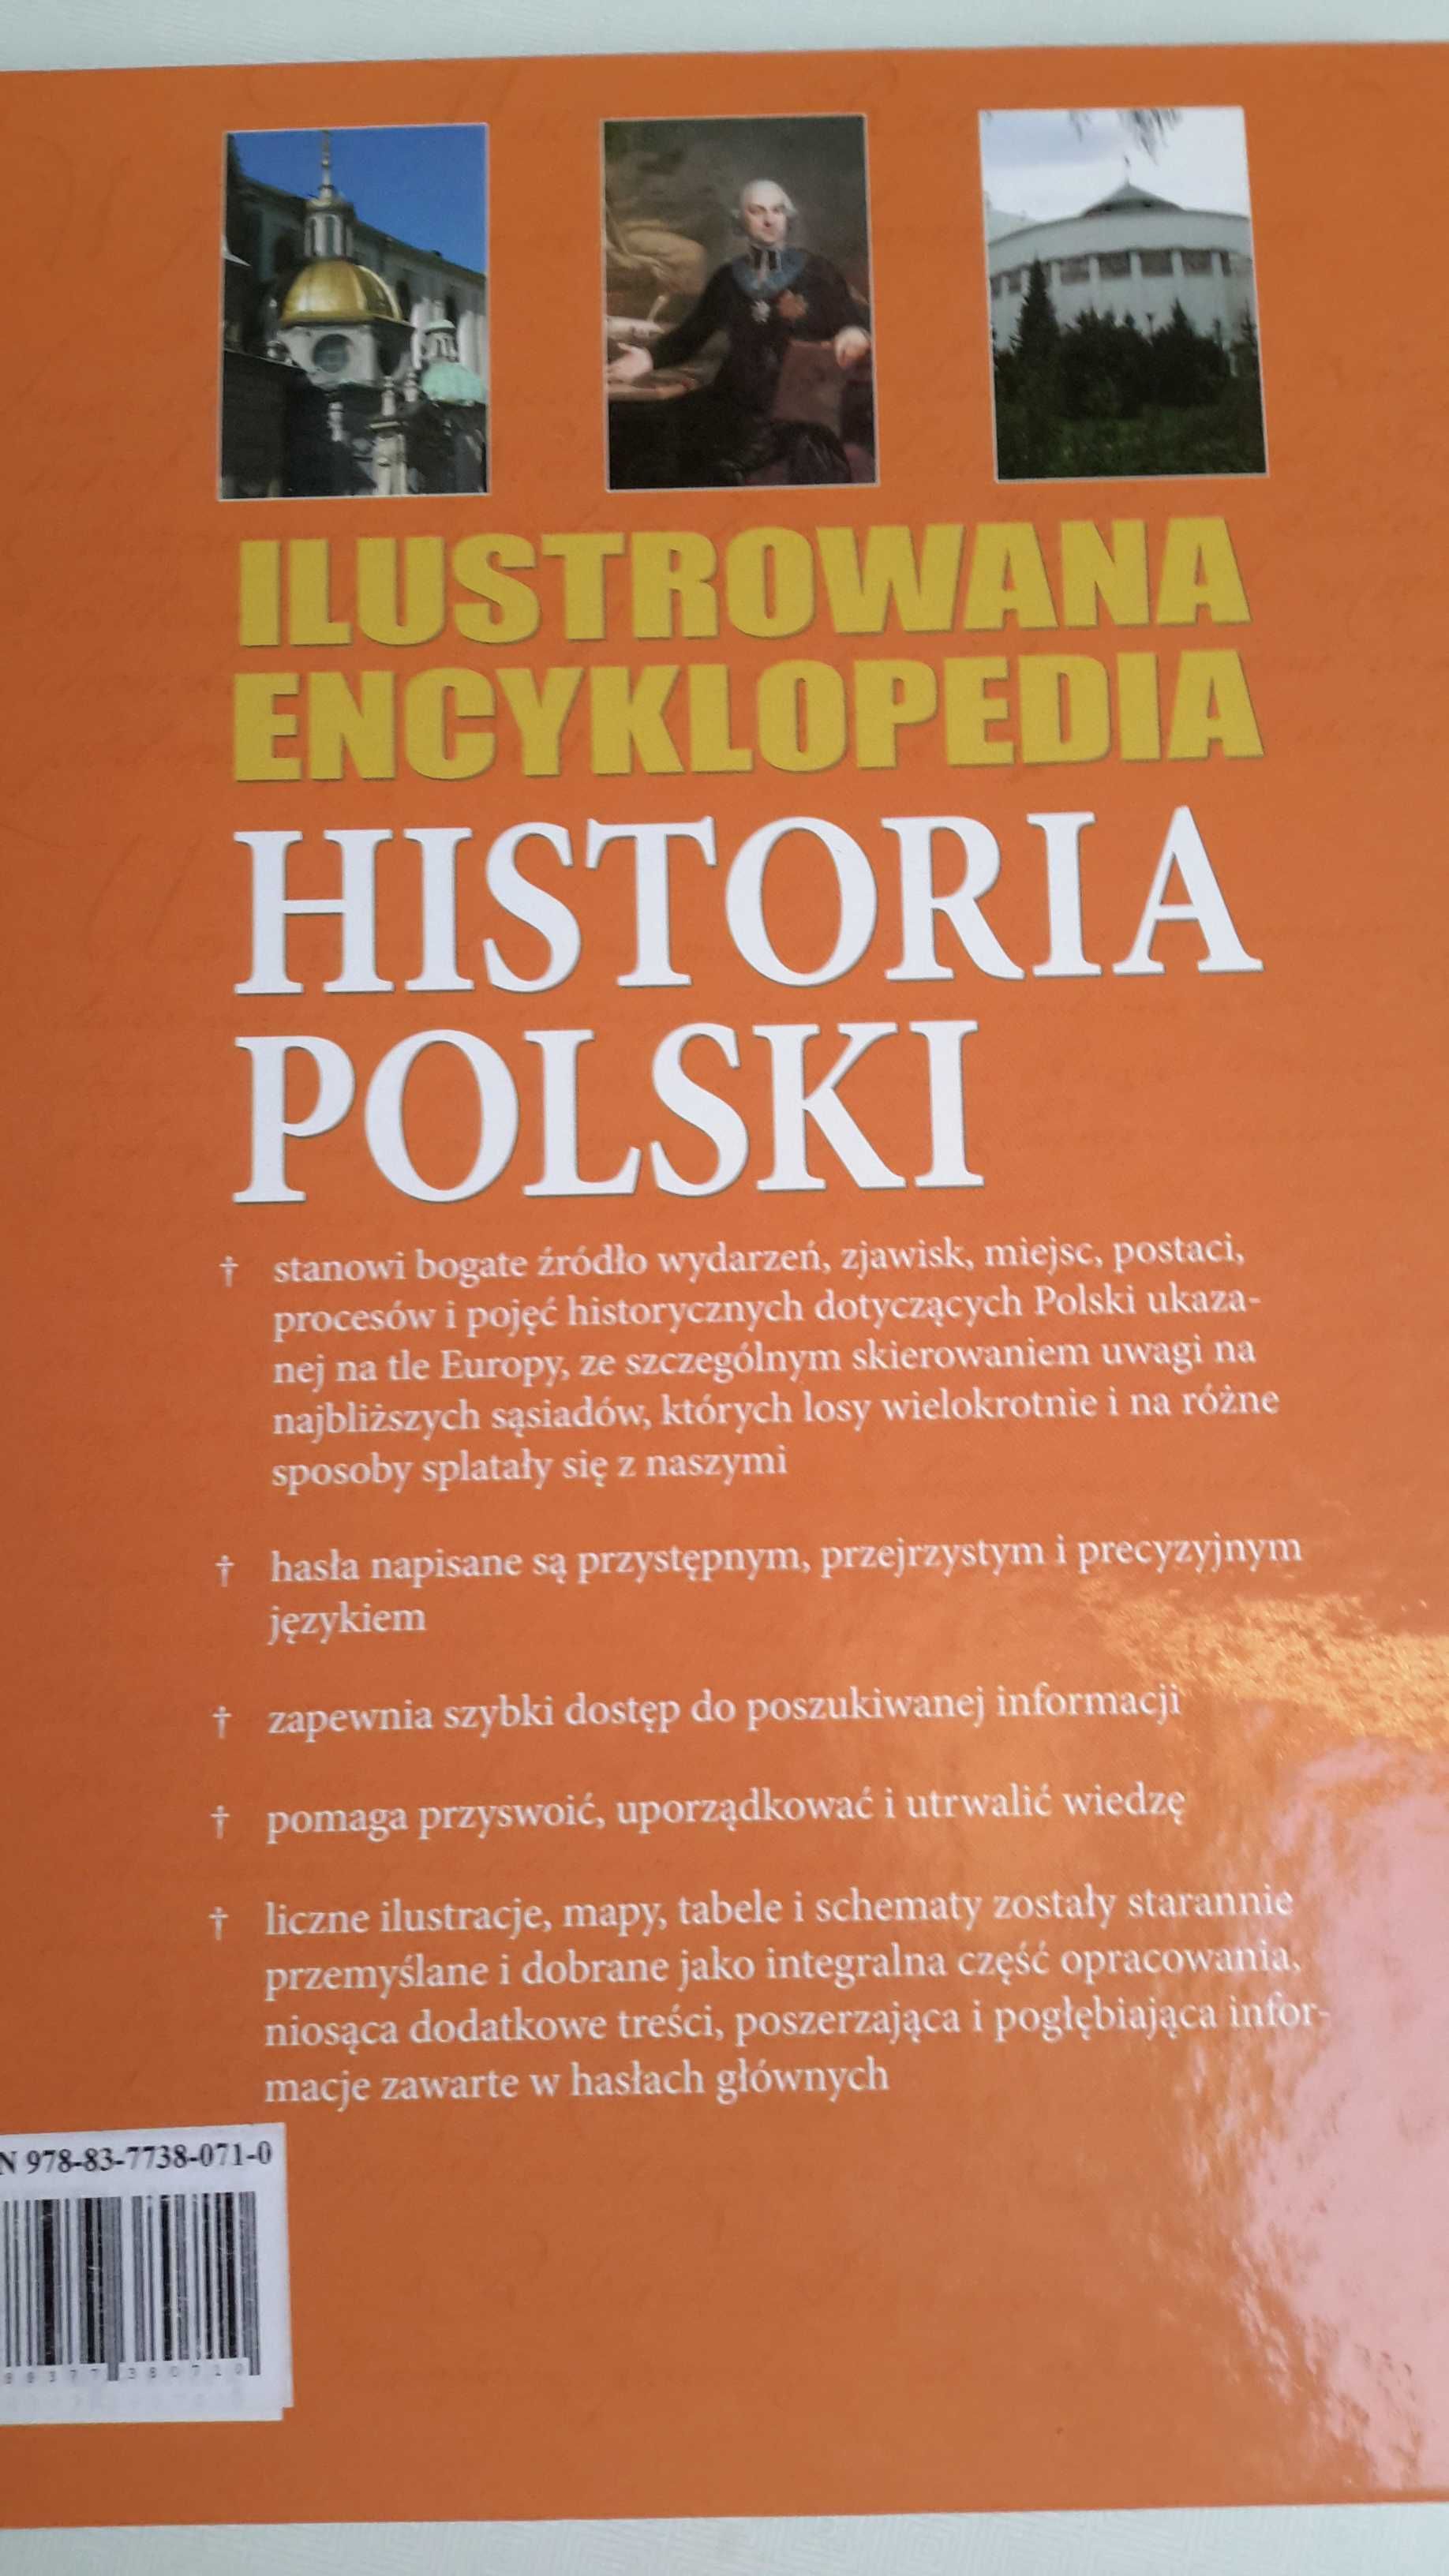 HISTORIA Polski ilustrowana encyklopedia